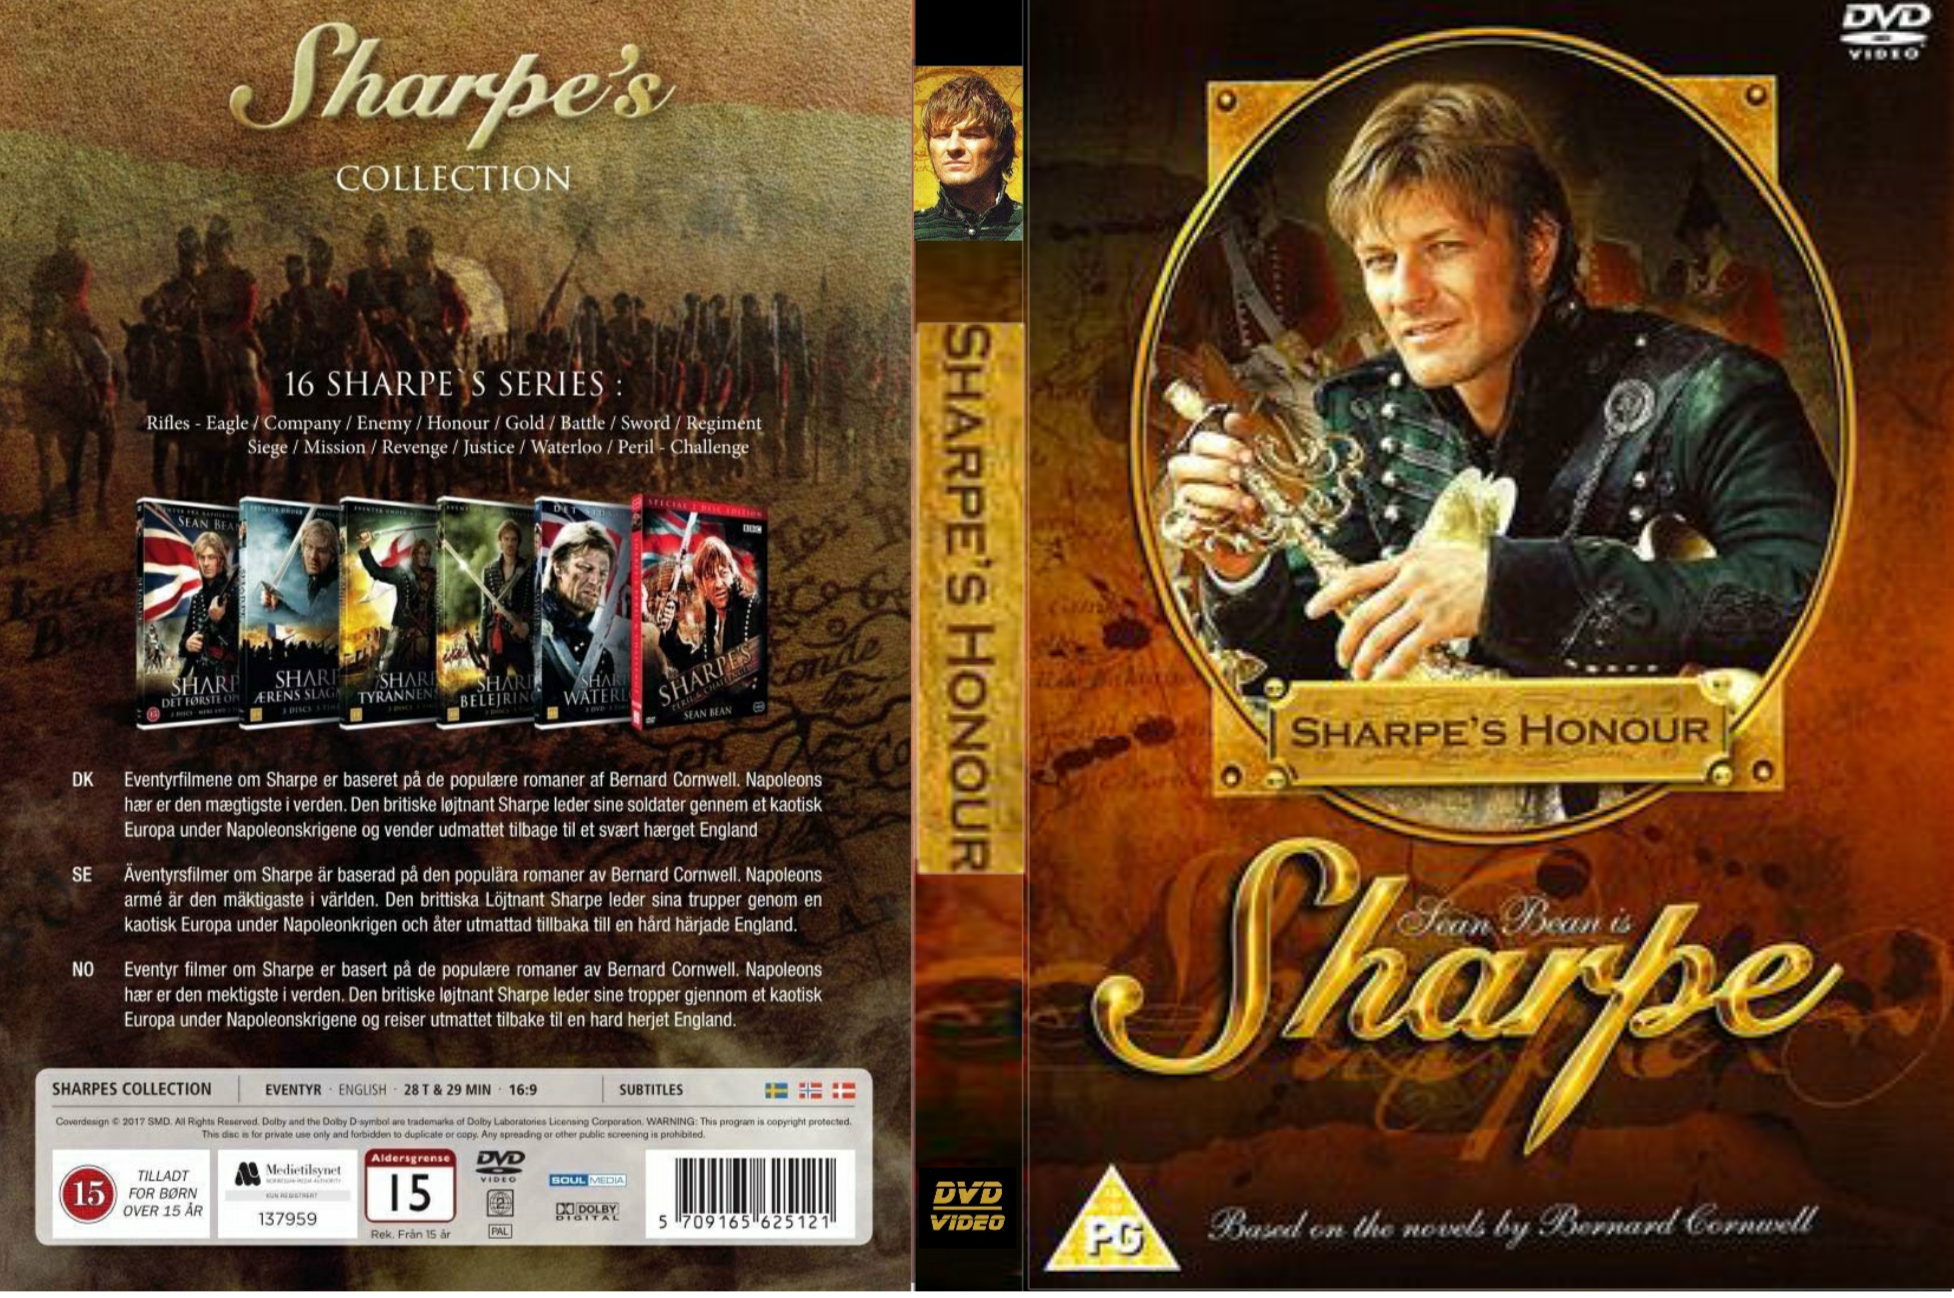 Sharpe's Honour 1994 - DvD 5